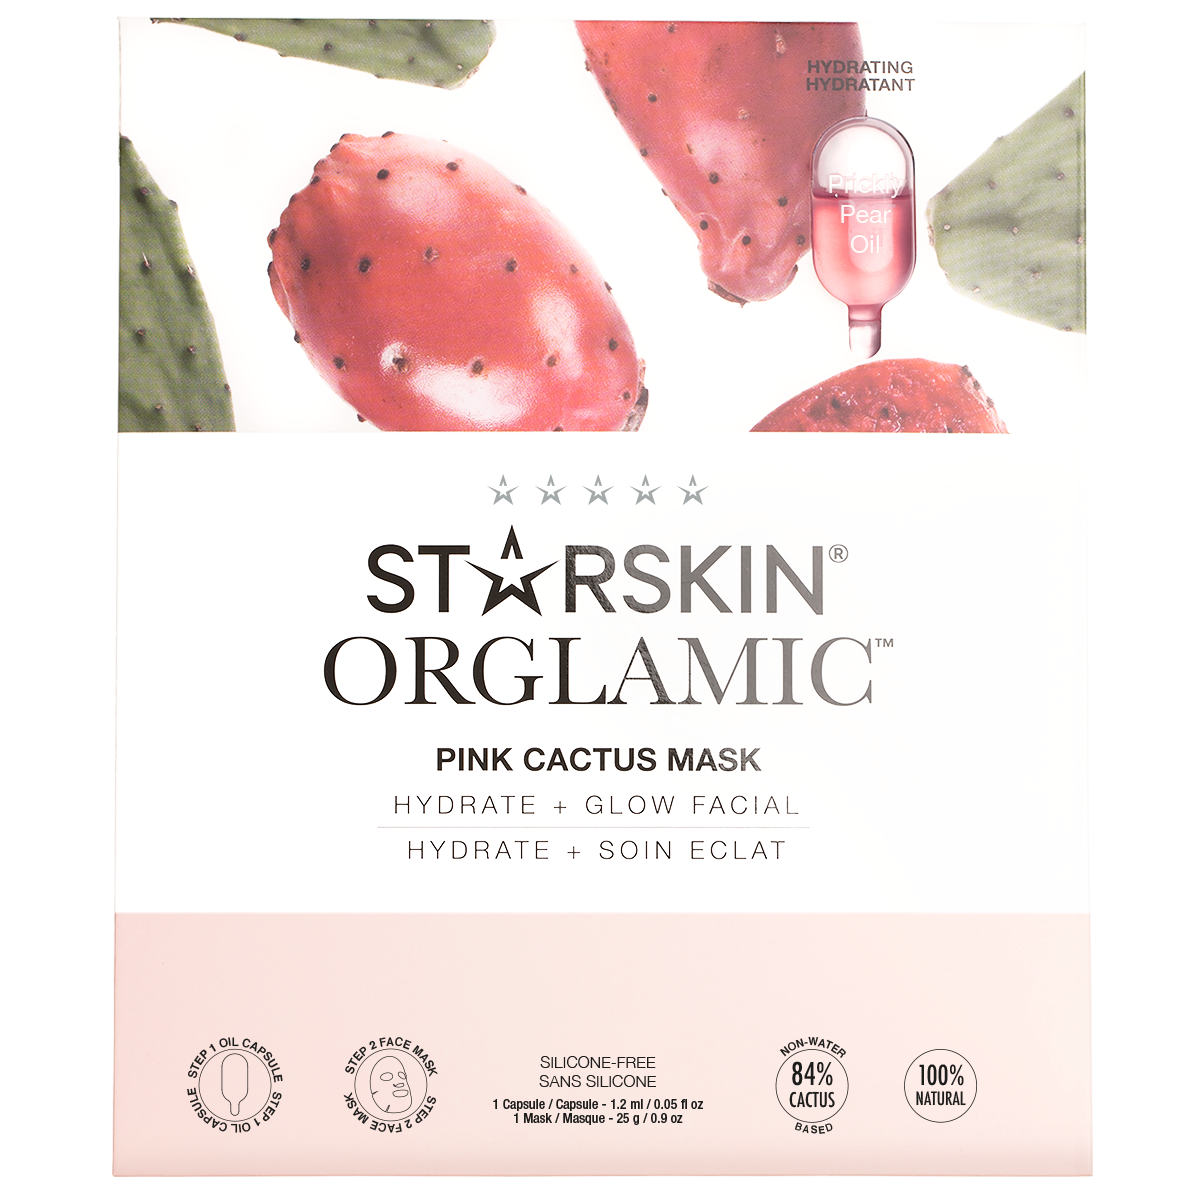 Starskin ORGLAMIC Pink Cactus Oil Mask being showcased